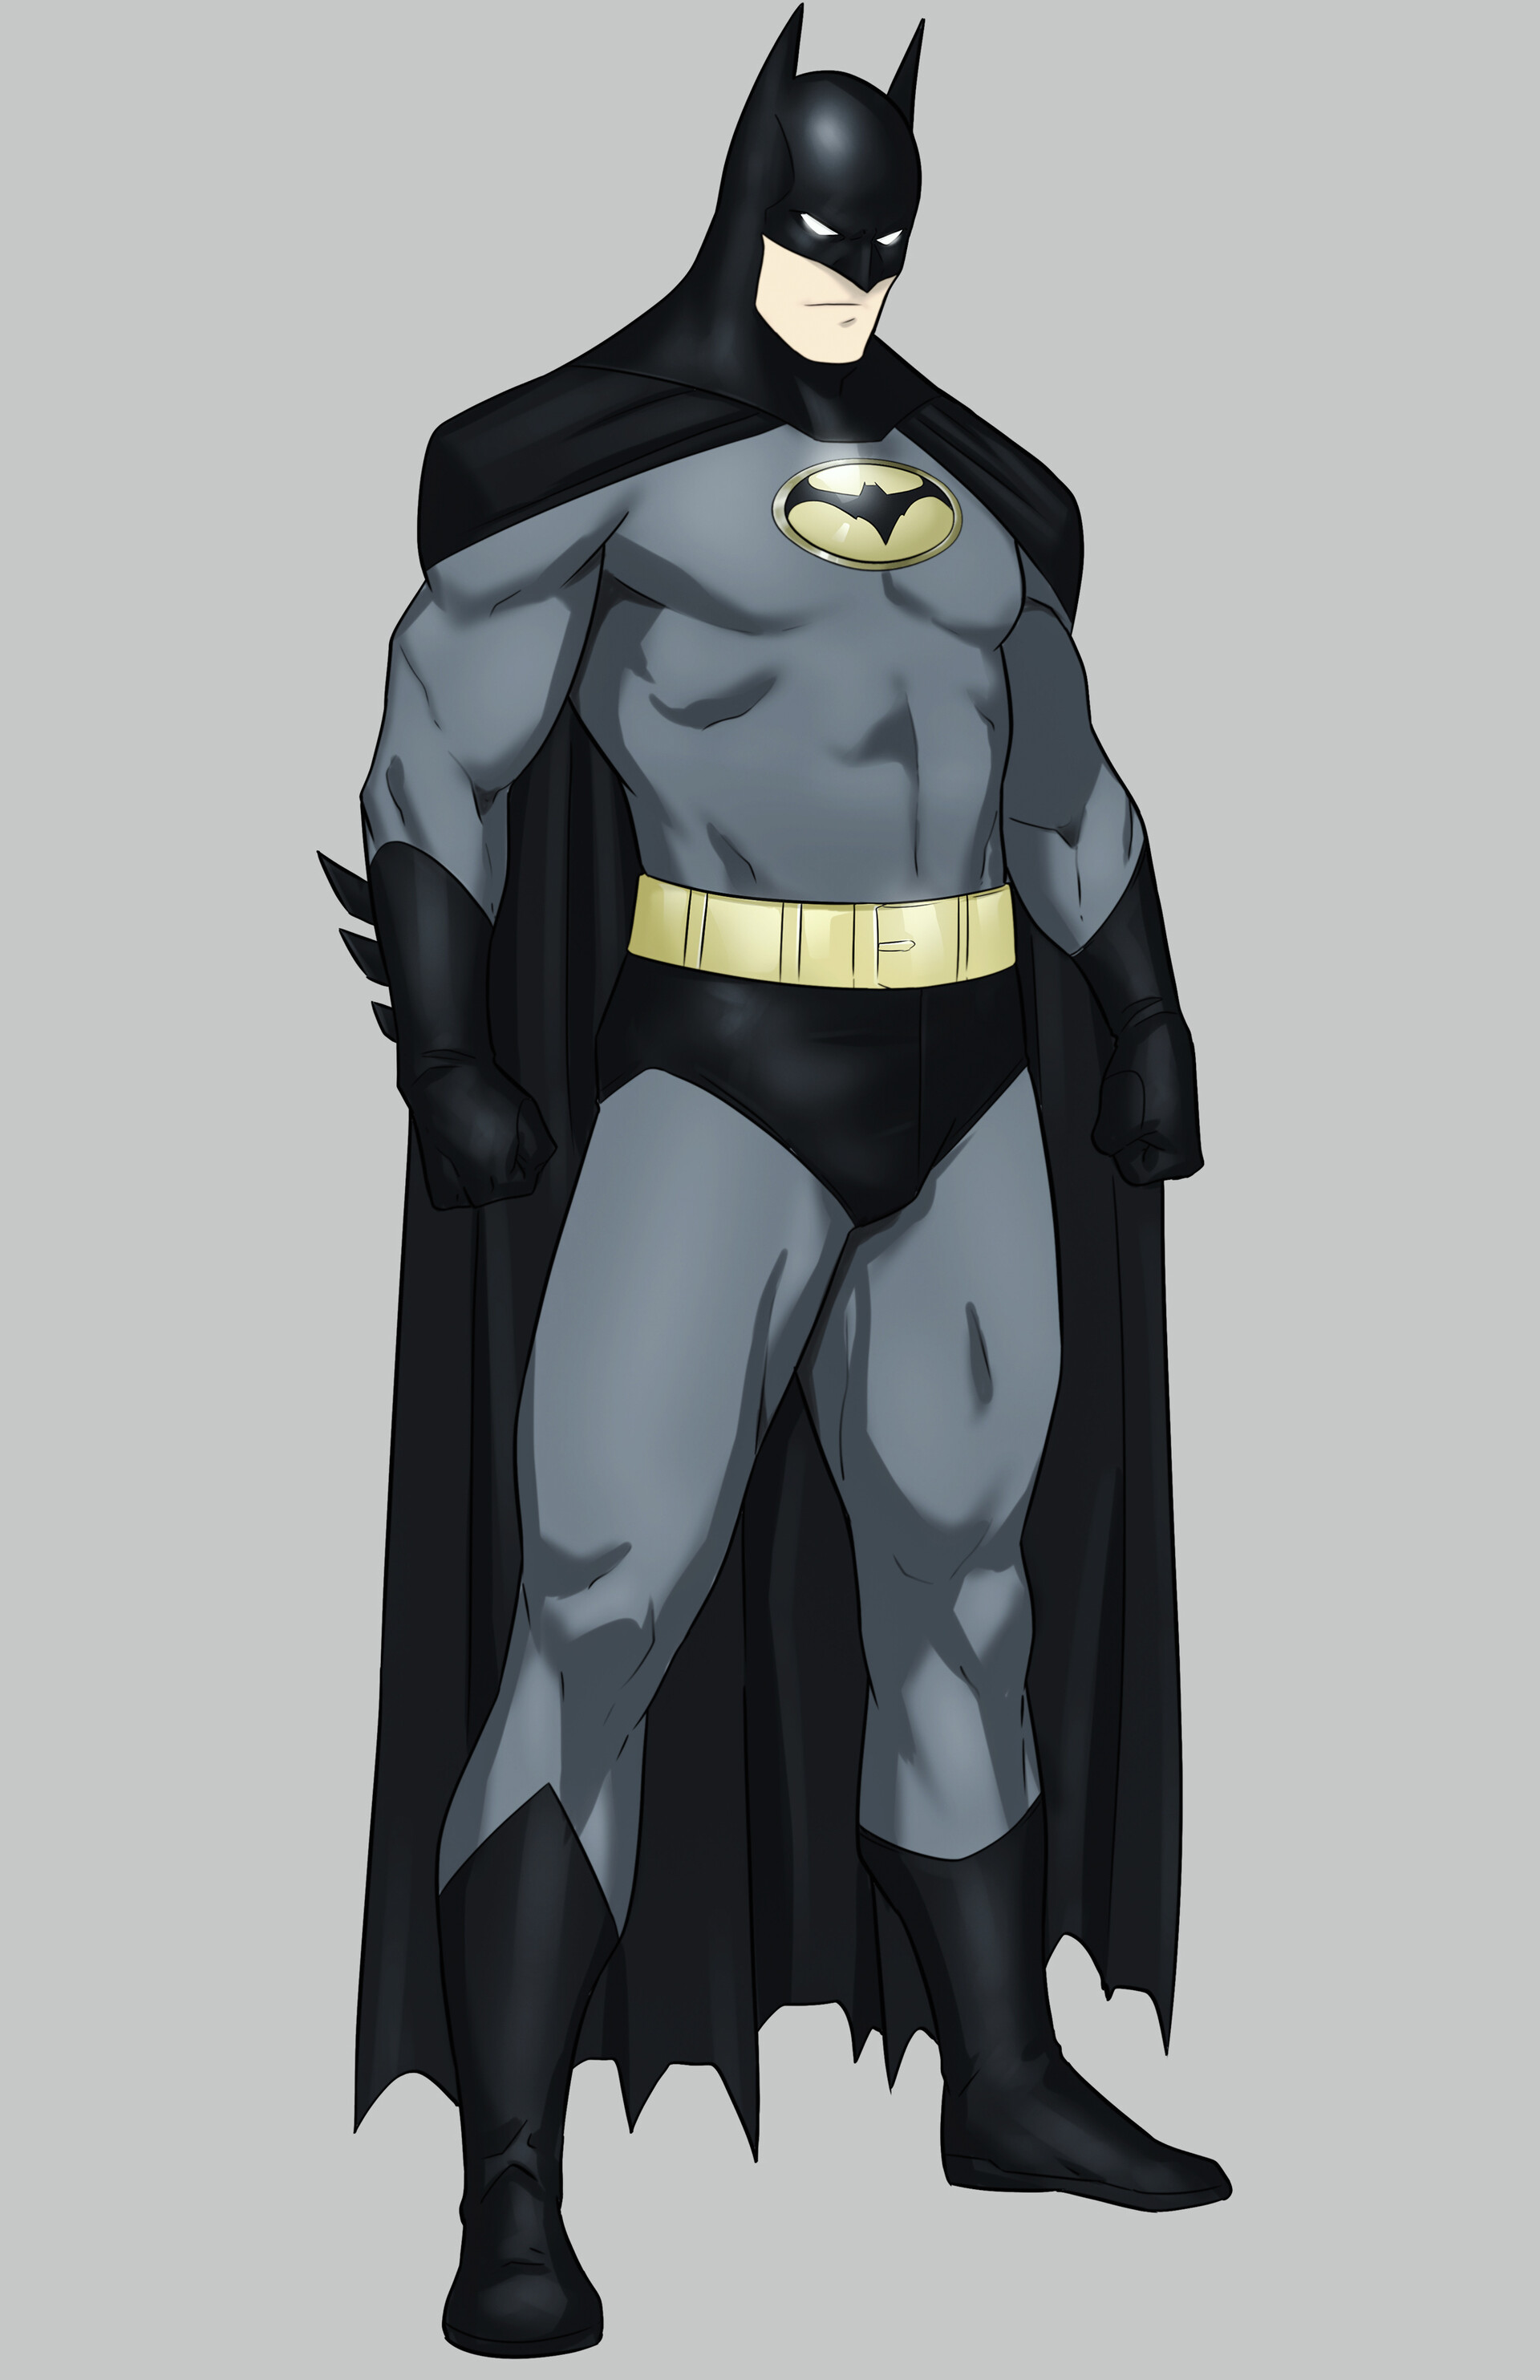 ArtStation - Batman The Animated Series